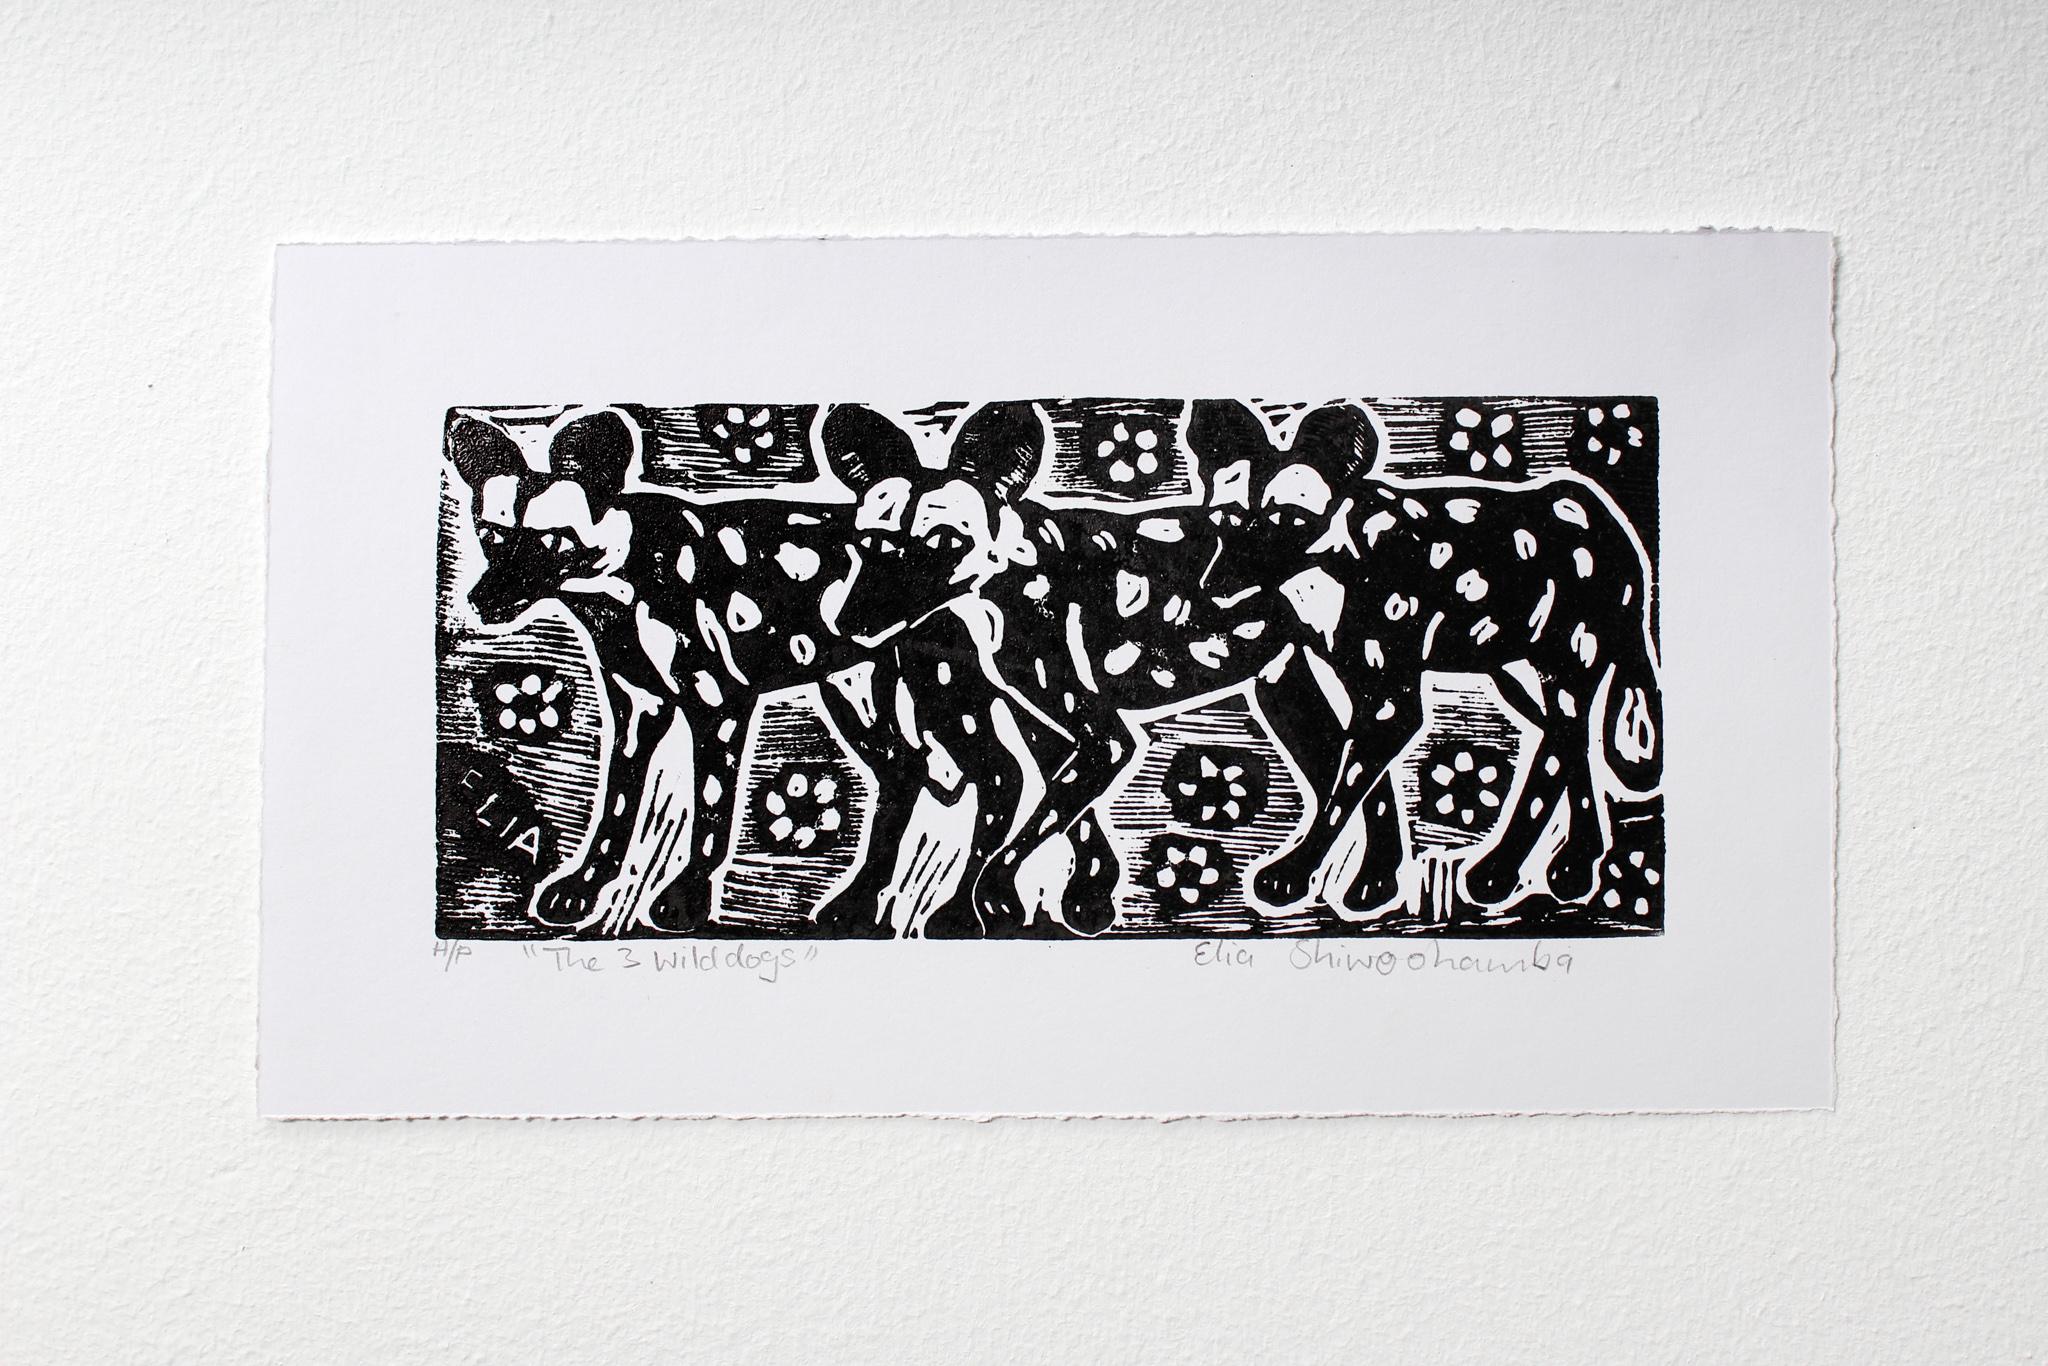 The 3 Wild Dogs, Elia Shiwoohamba, Linoleum block print on paper